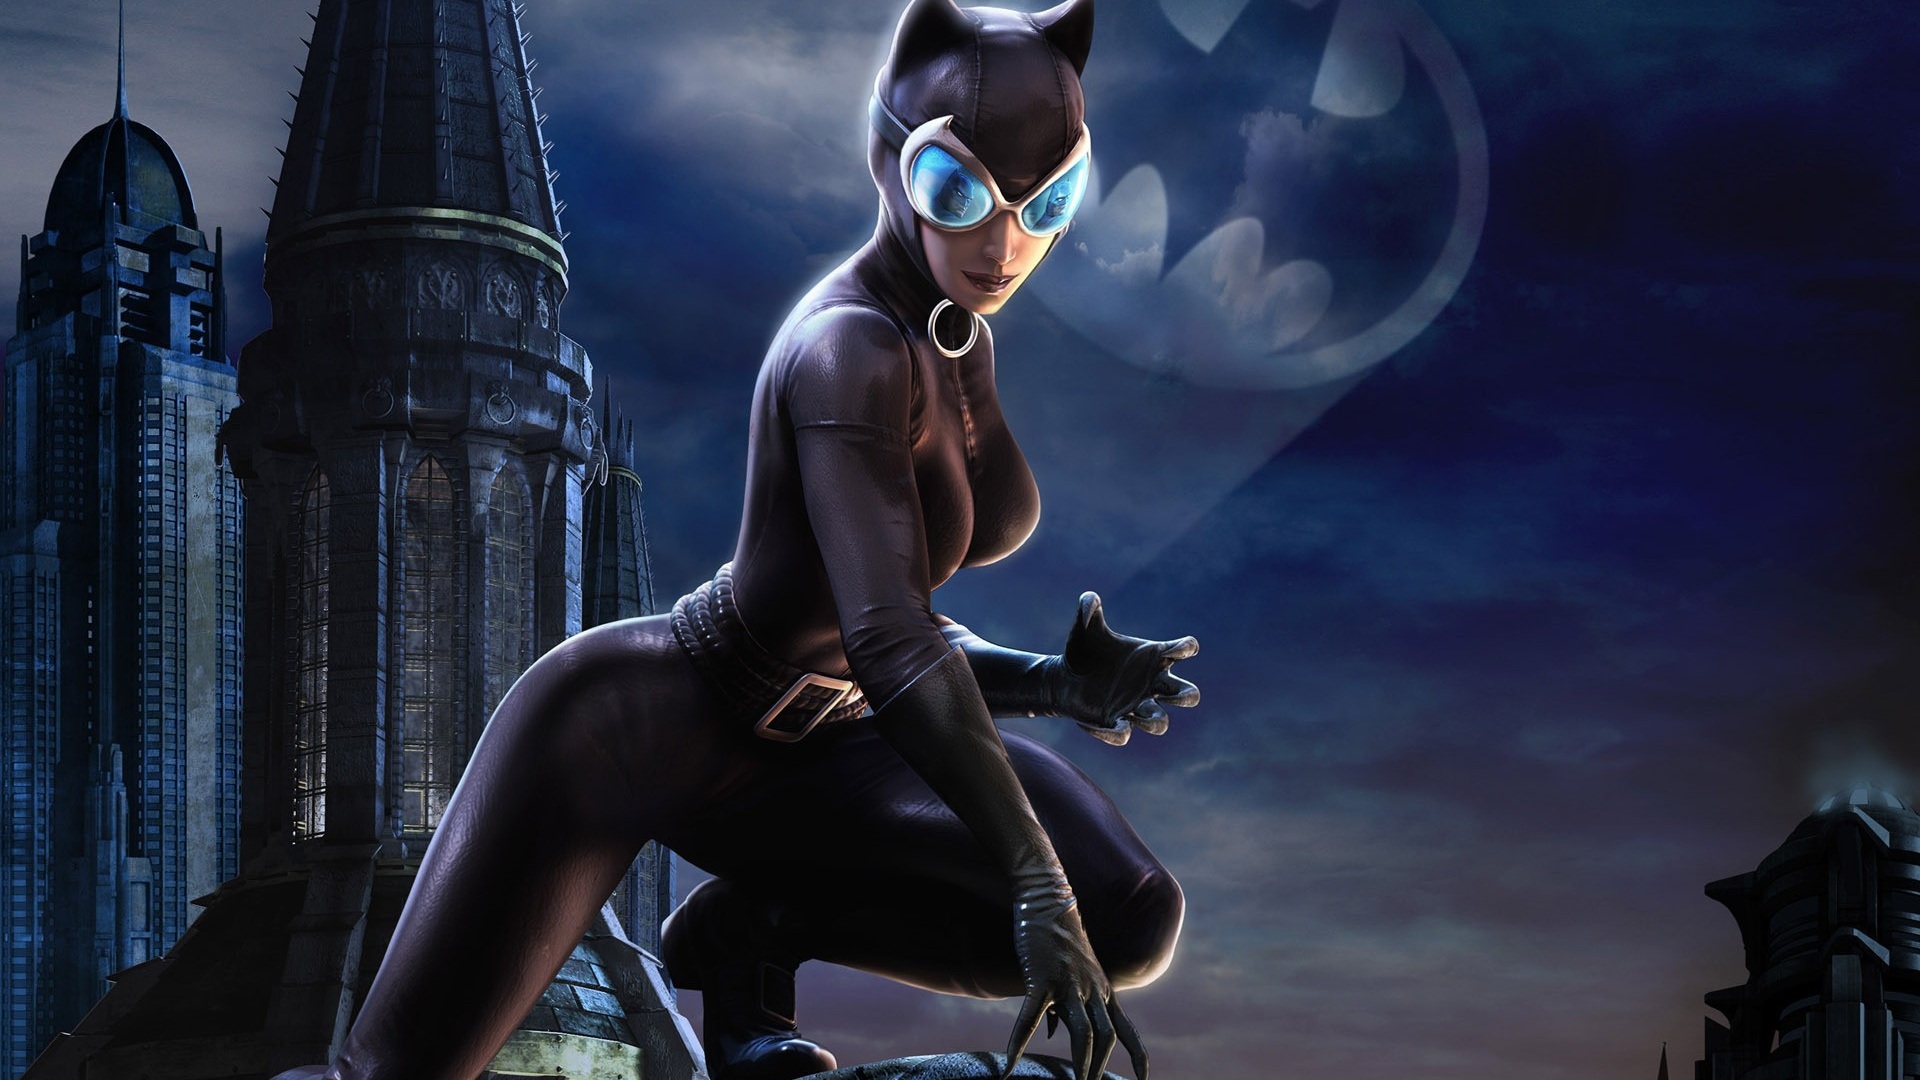 General 1920x1080 Batman Catwoman artwork dark Gotham City claws night mask DC Universe Online video games DC Comics